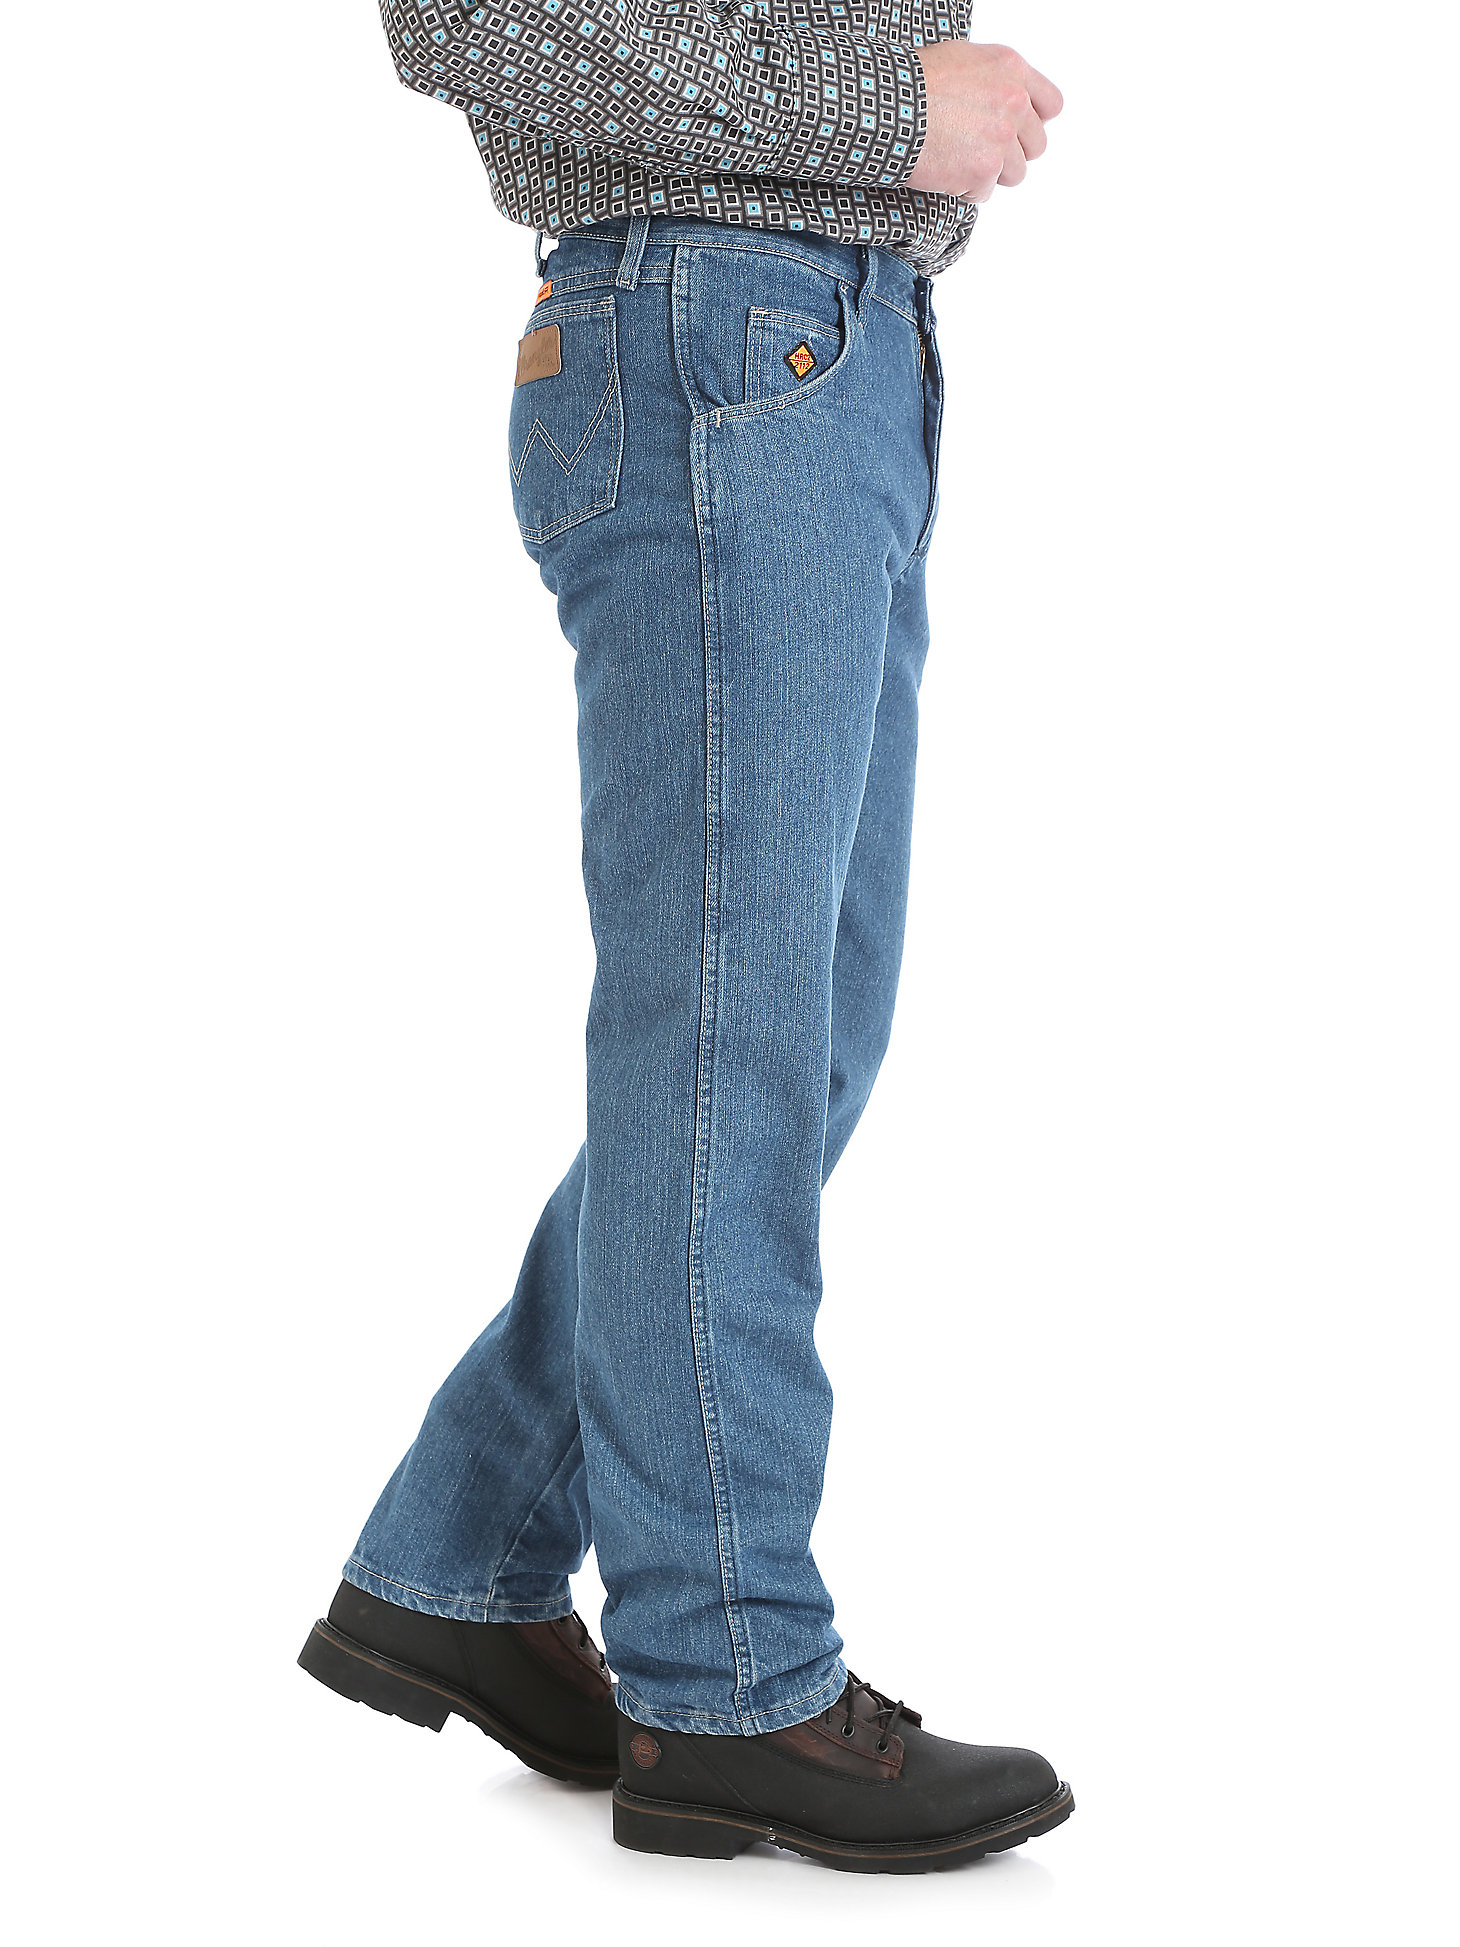 Men's Wrangler® FR Cool Vantage Flame Resistant Regular Fit Jean in True Blue alternative view 1